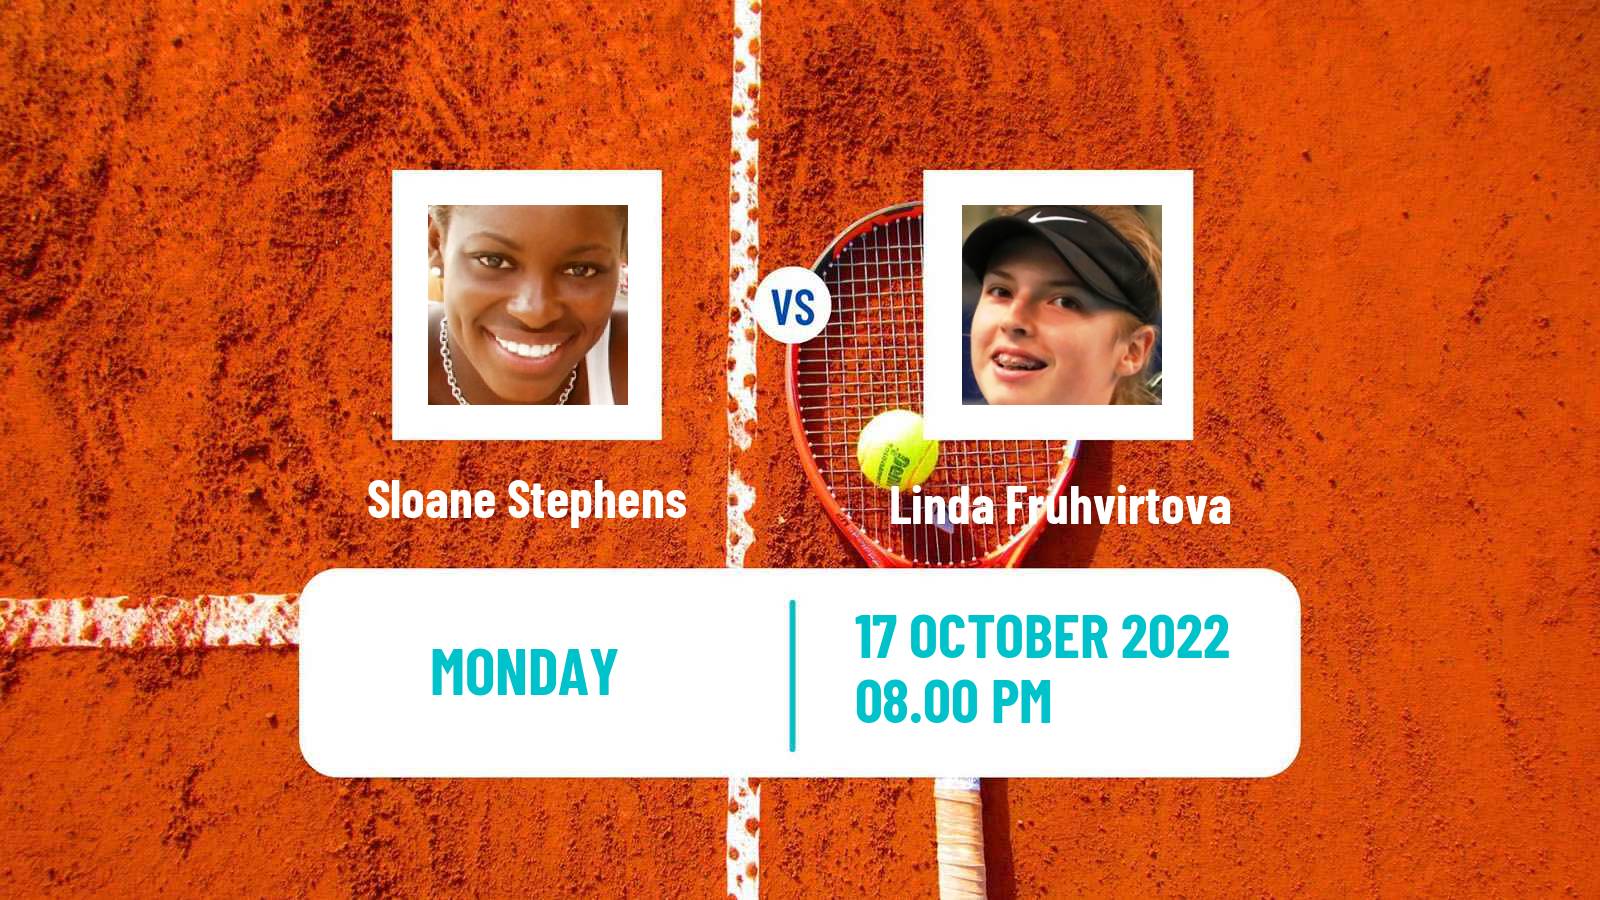 Tennis WTA Guadalajara 2 Sloane Stephens - Linda Fruhvirtova